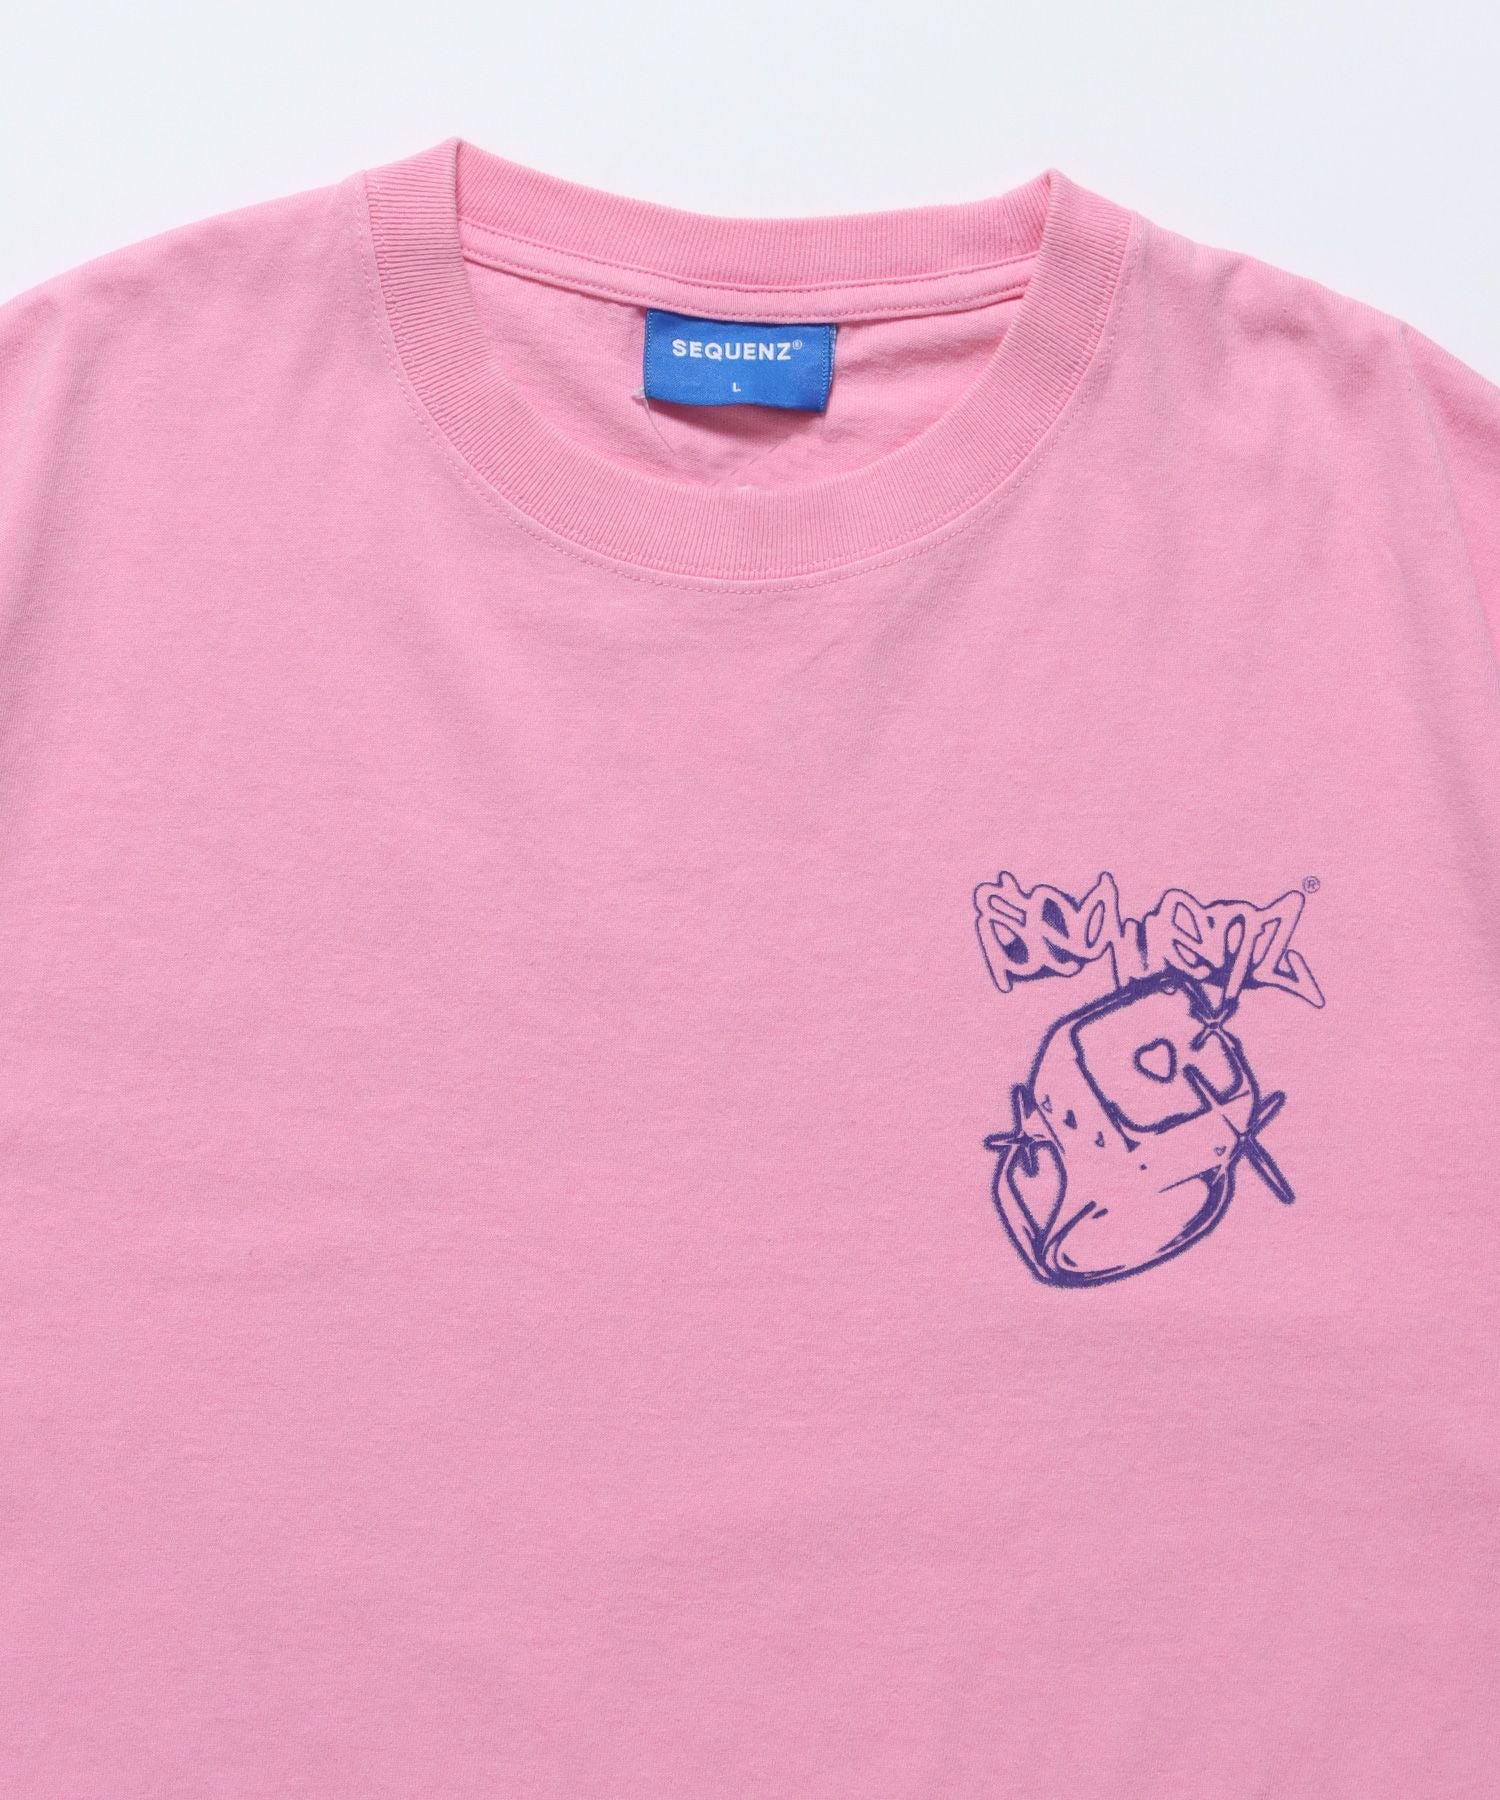 PRECIOUS FADE S/S TEE / タイダイ 半袖 クルーネック ハート ダイス ブランドロゴ ピンク